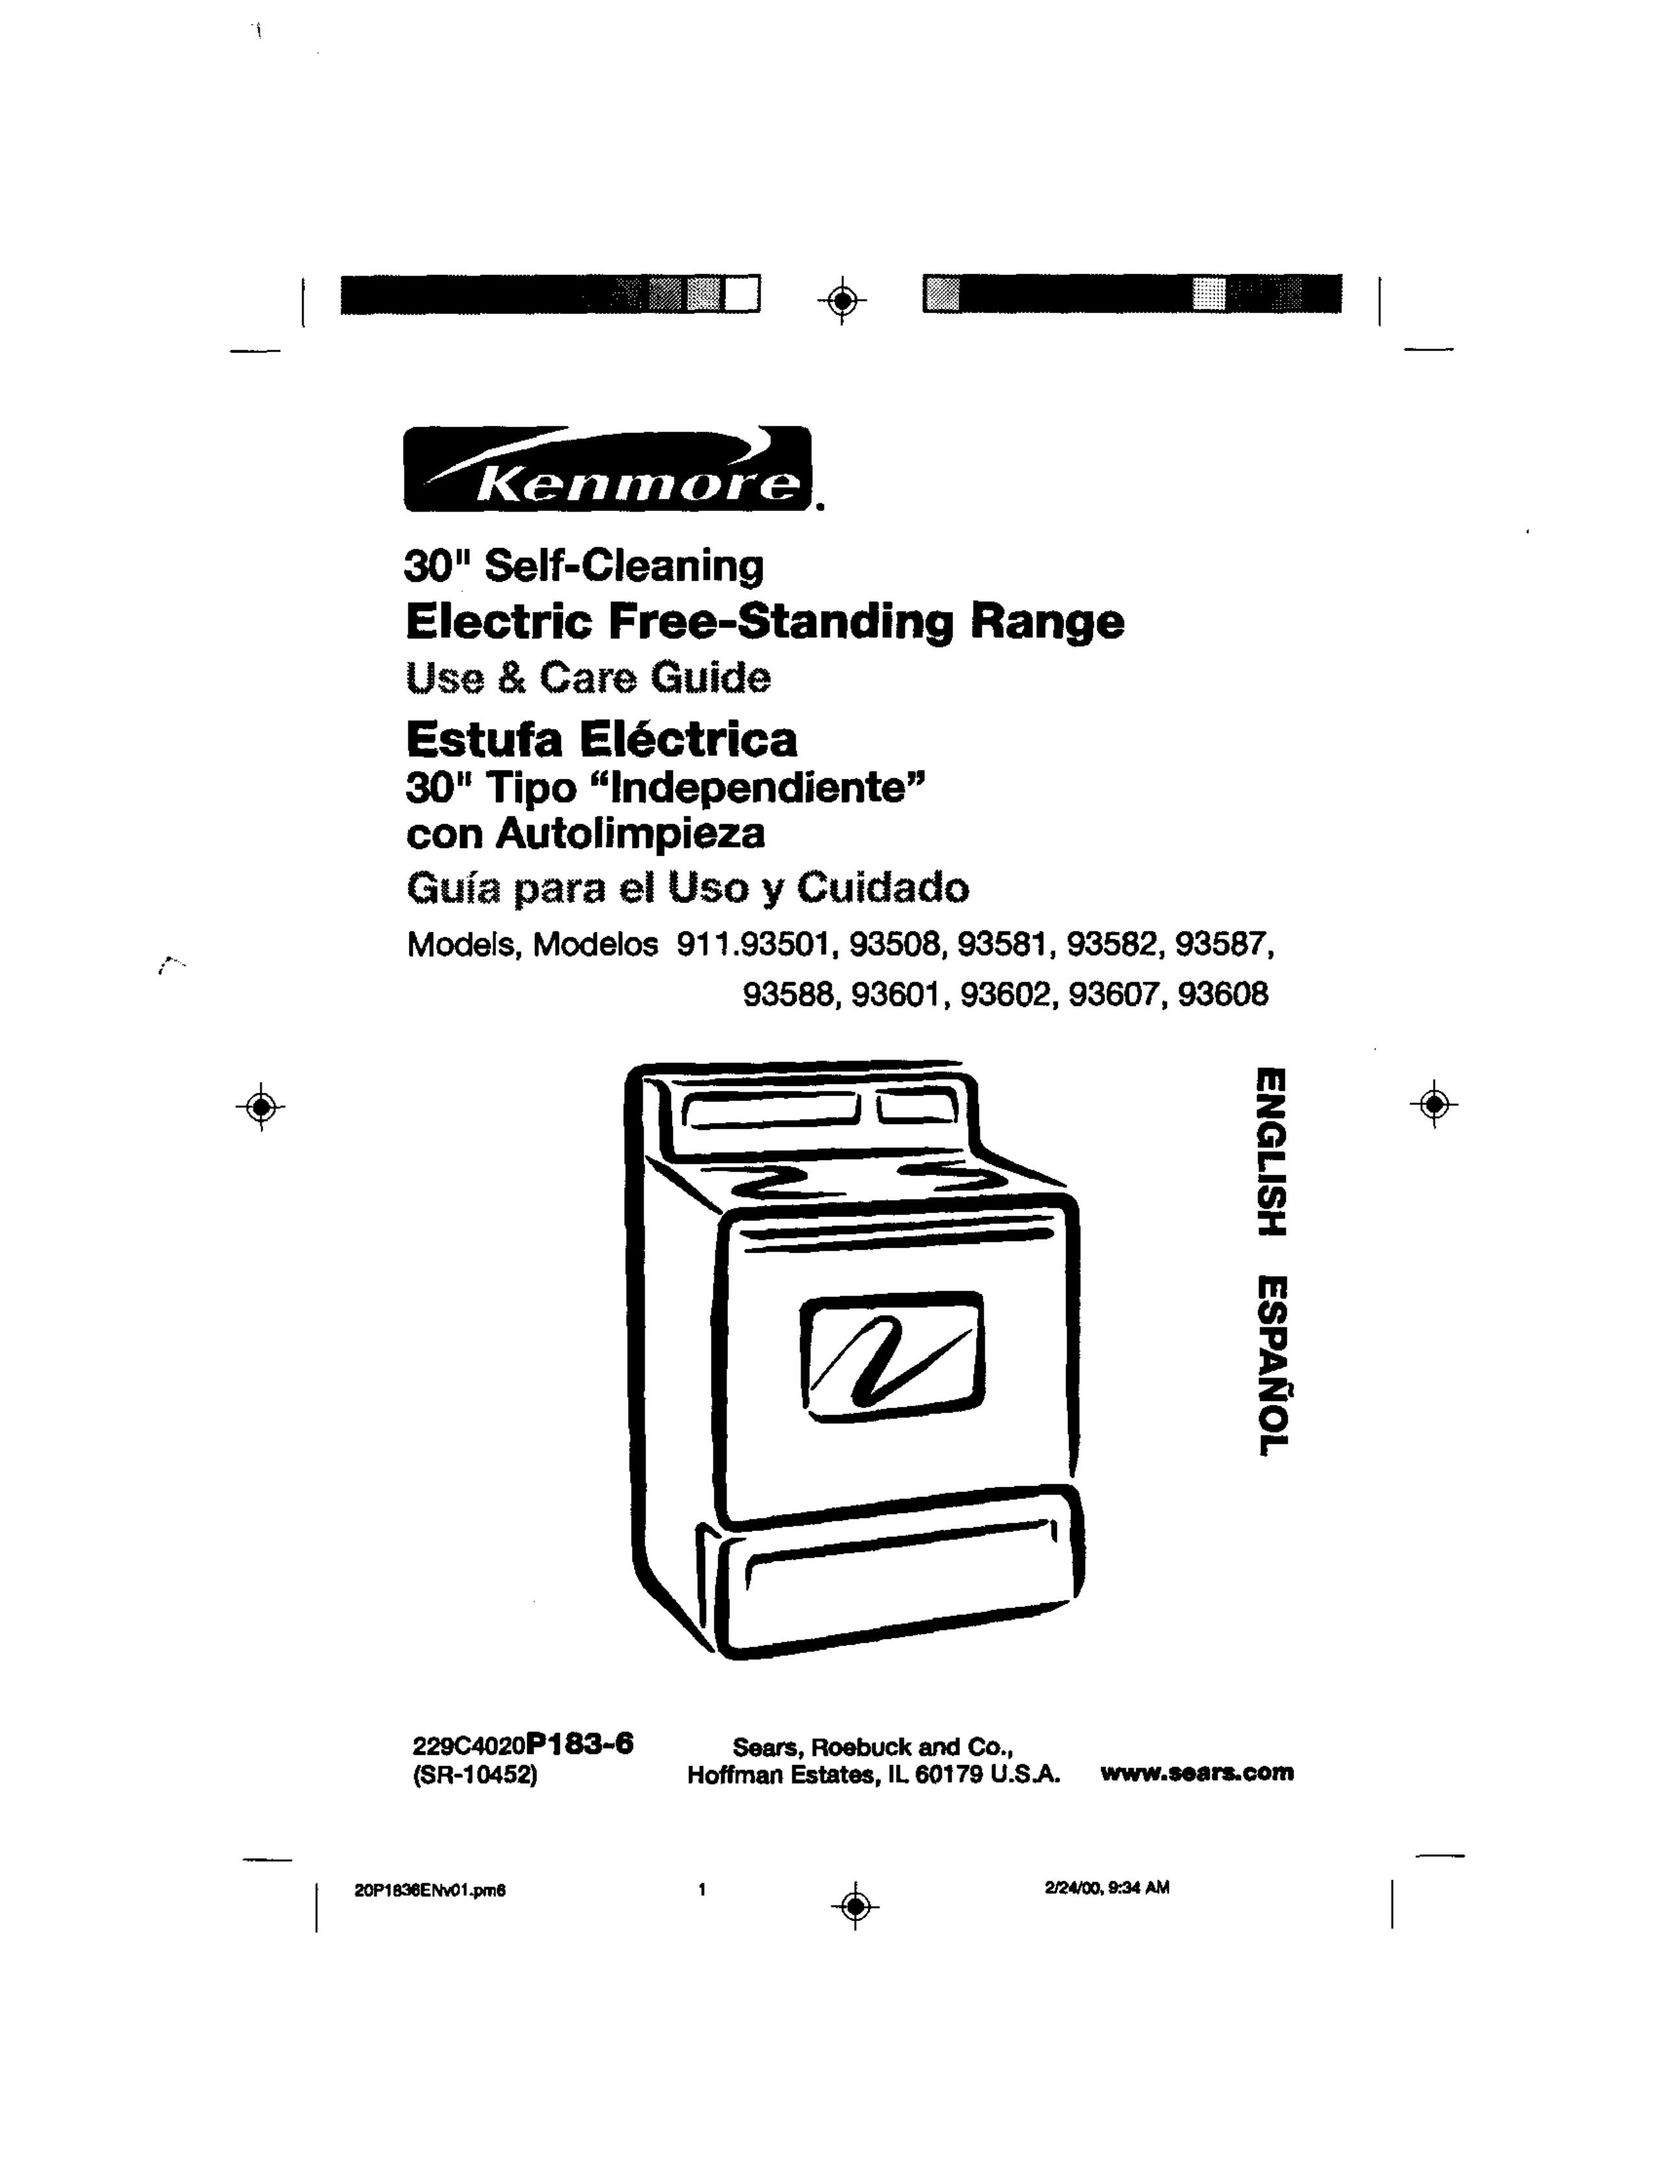 Kenmore 911.93582 Oven User Manual